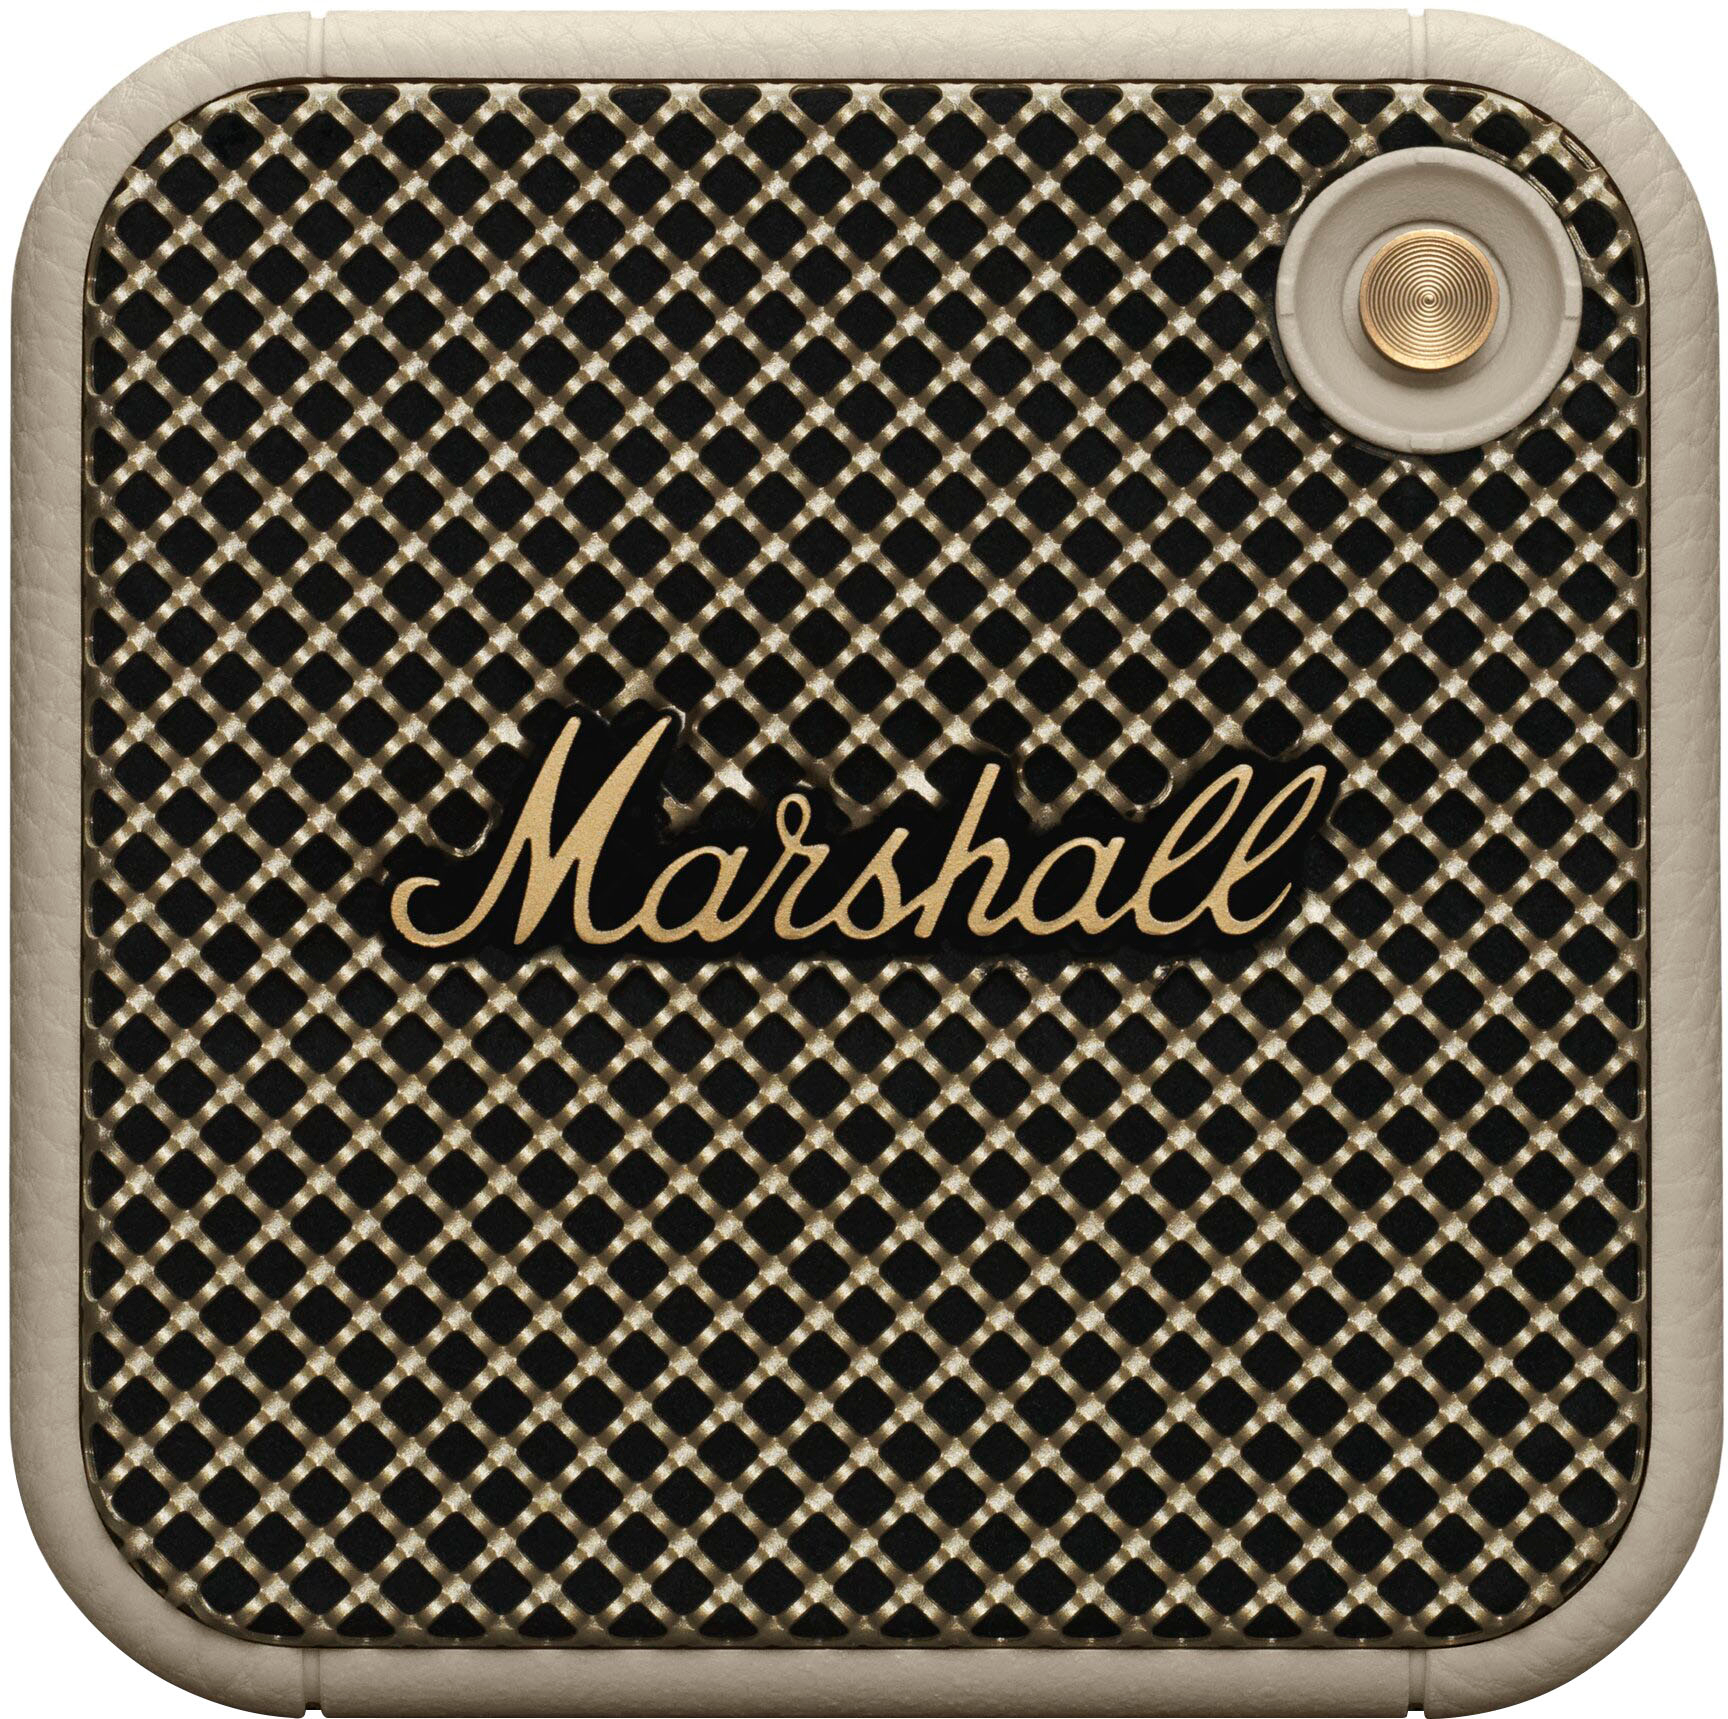 Marshall WILLEN PORTABLE BLUETOOTH SPEAKER Cream 1006294 - Best Buy